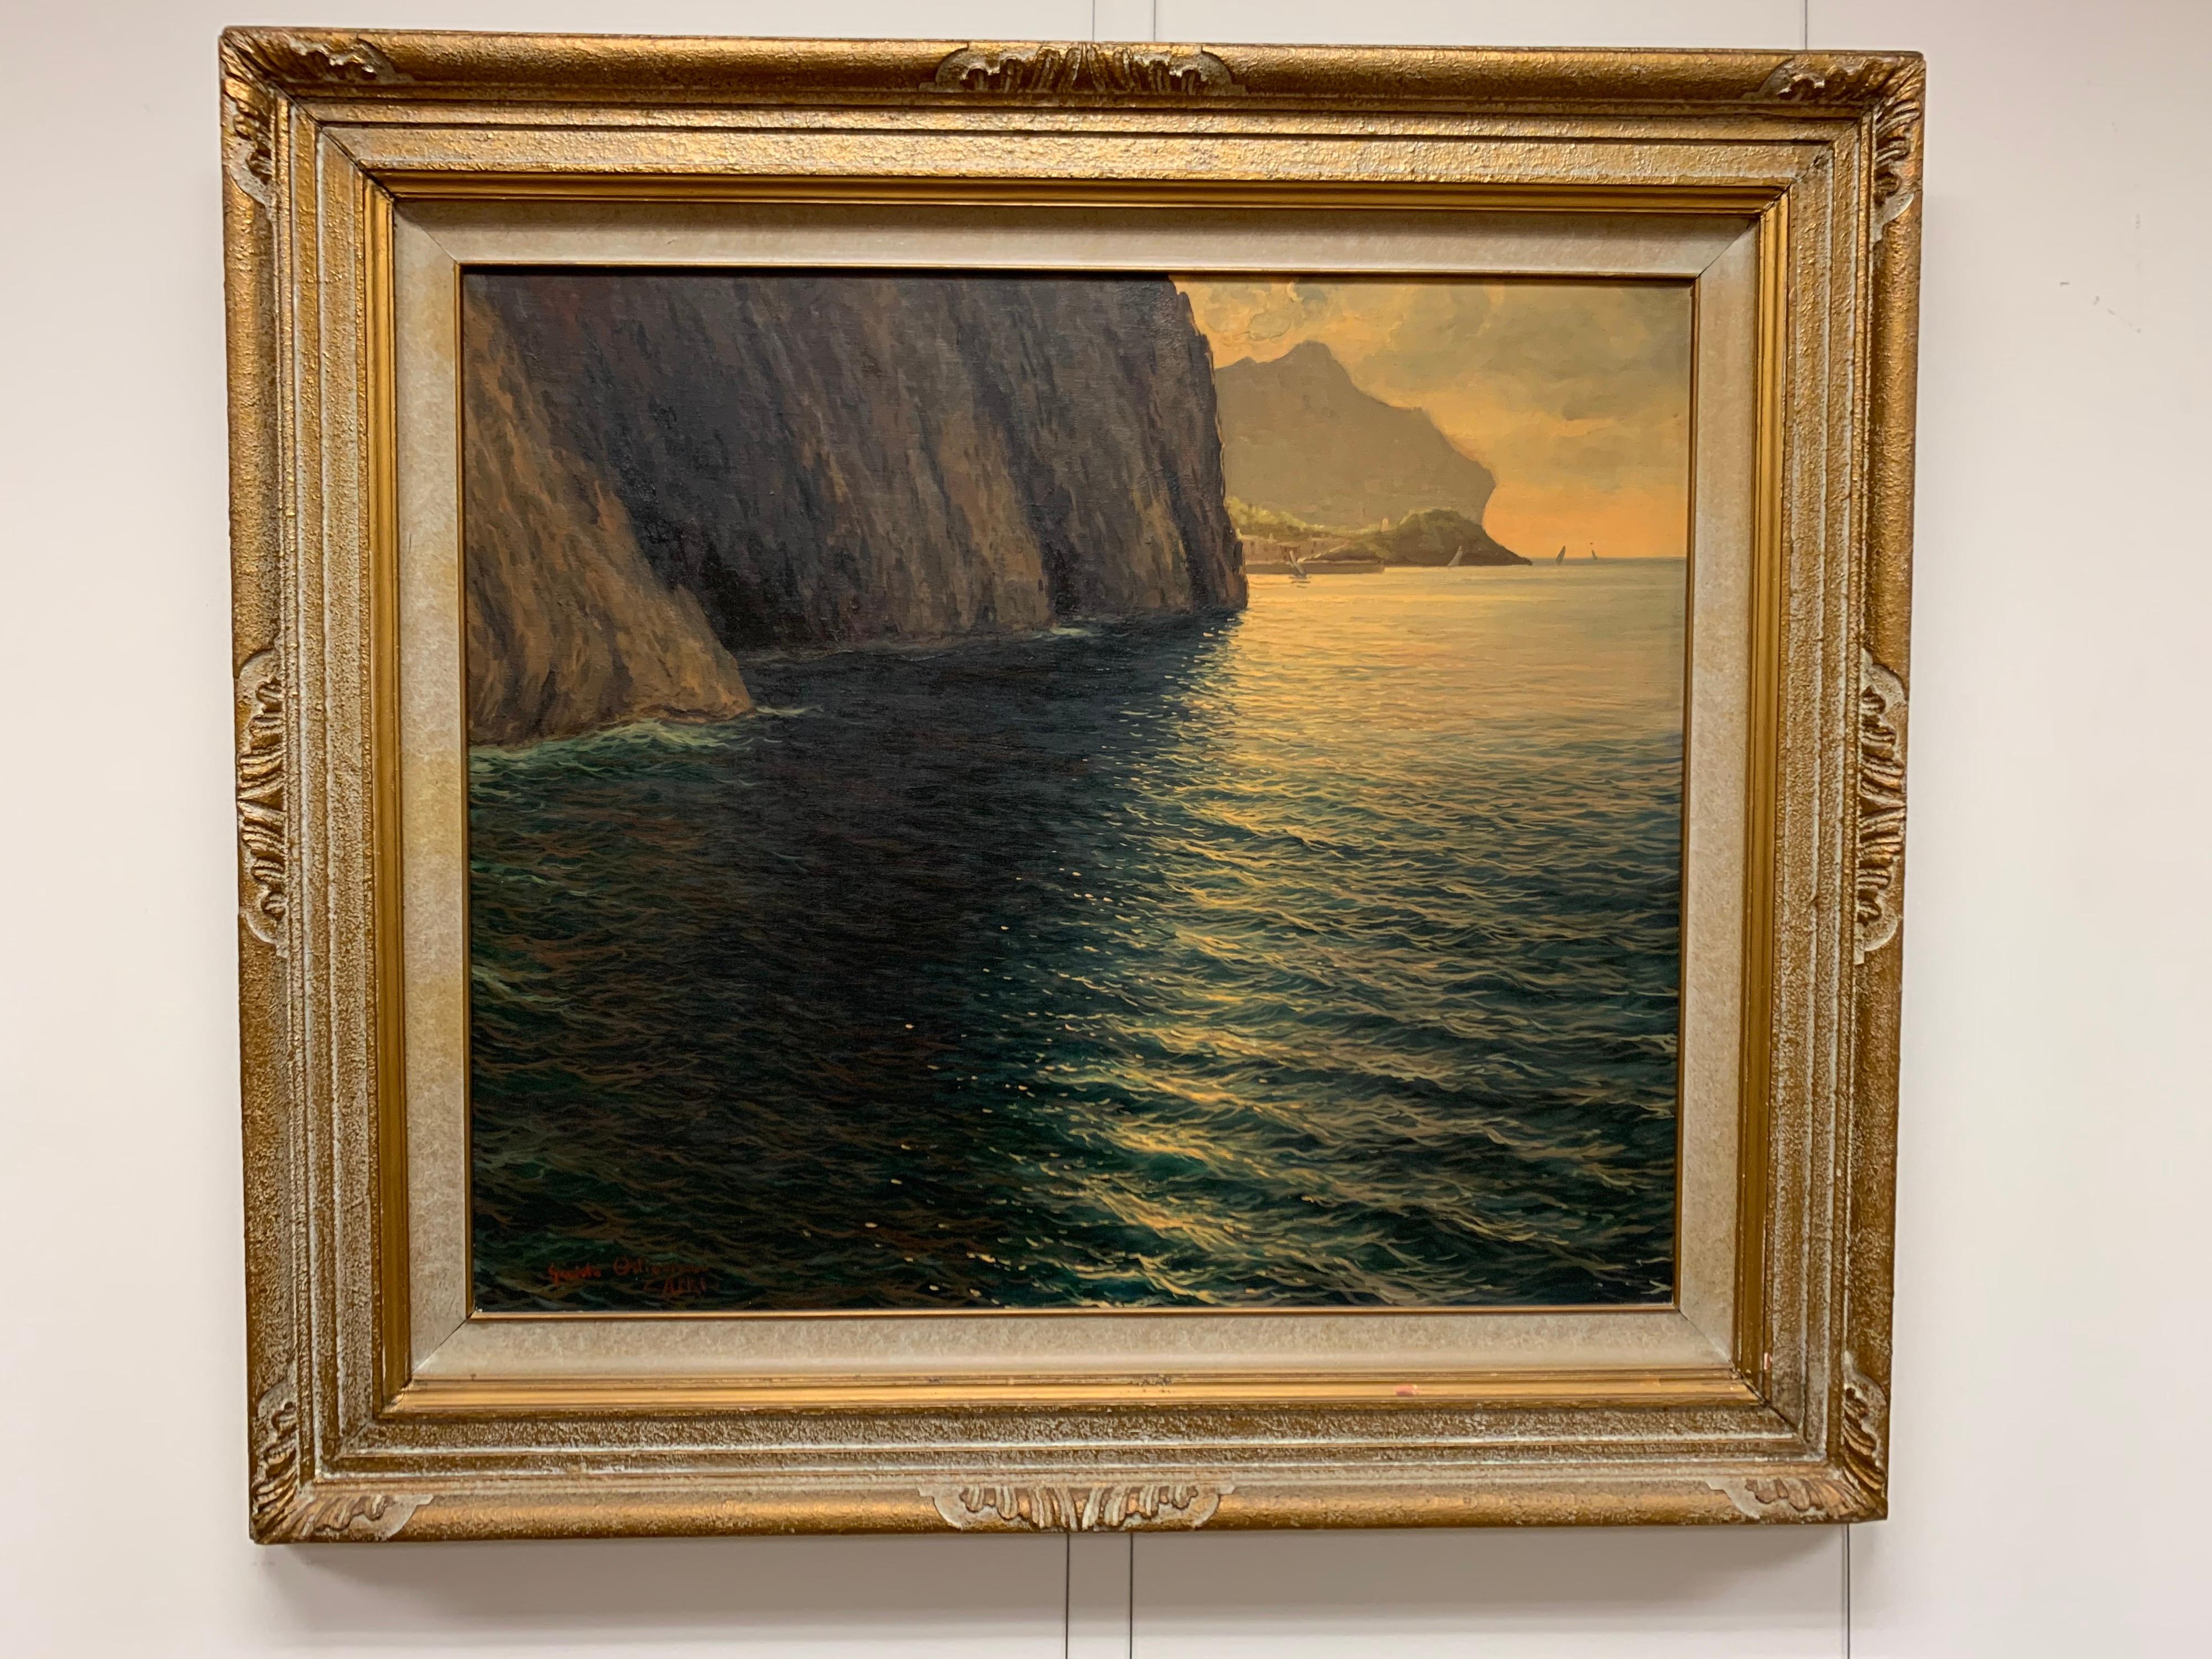 Original Signed Guido Odierna “Capri” Oil on Canvas Seascape 4